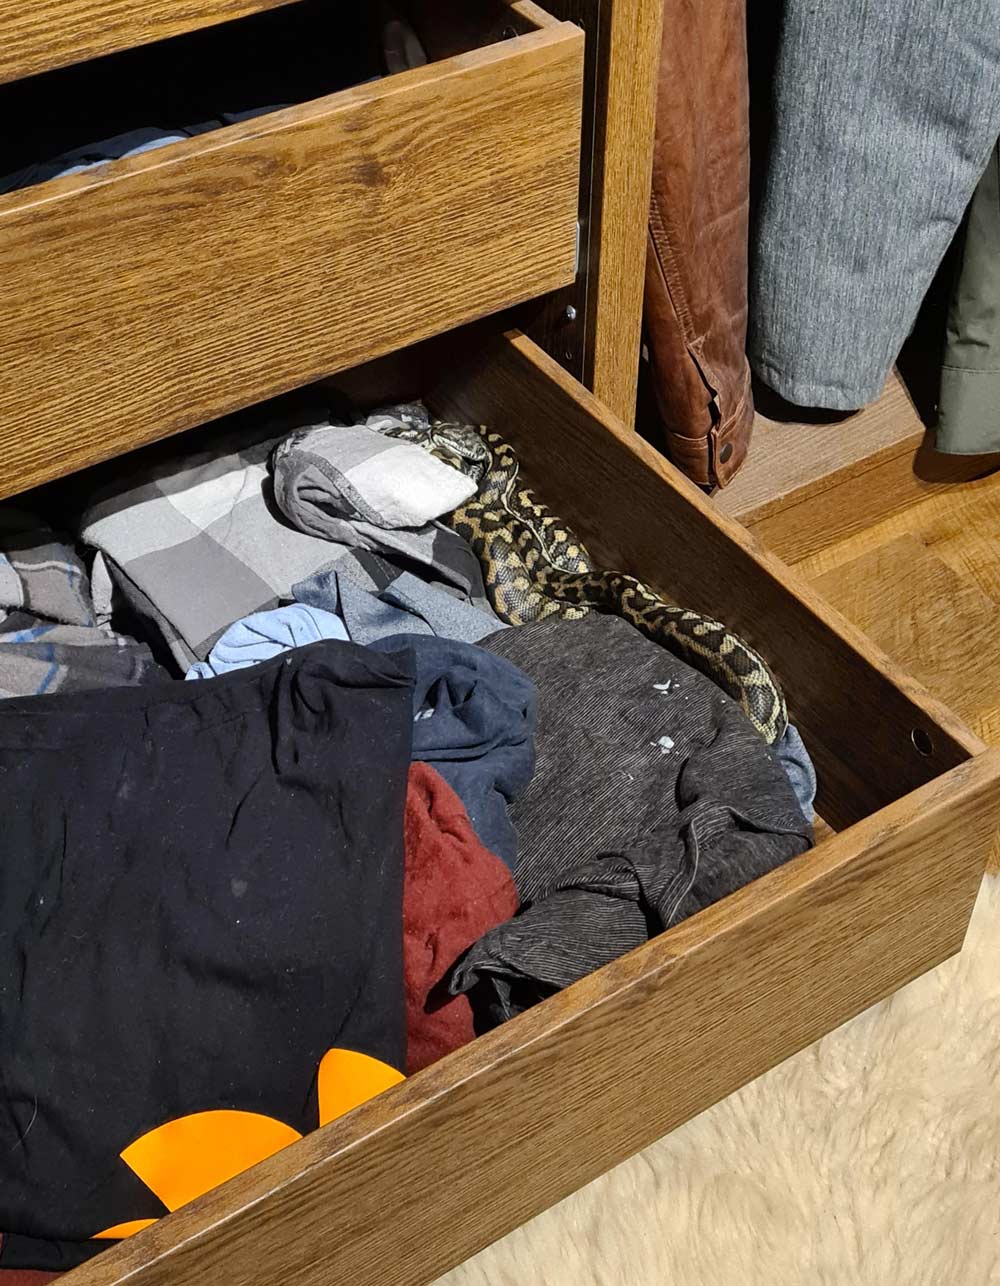 Woke up to a snake in my drawer (Australia)